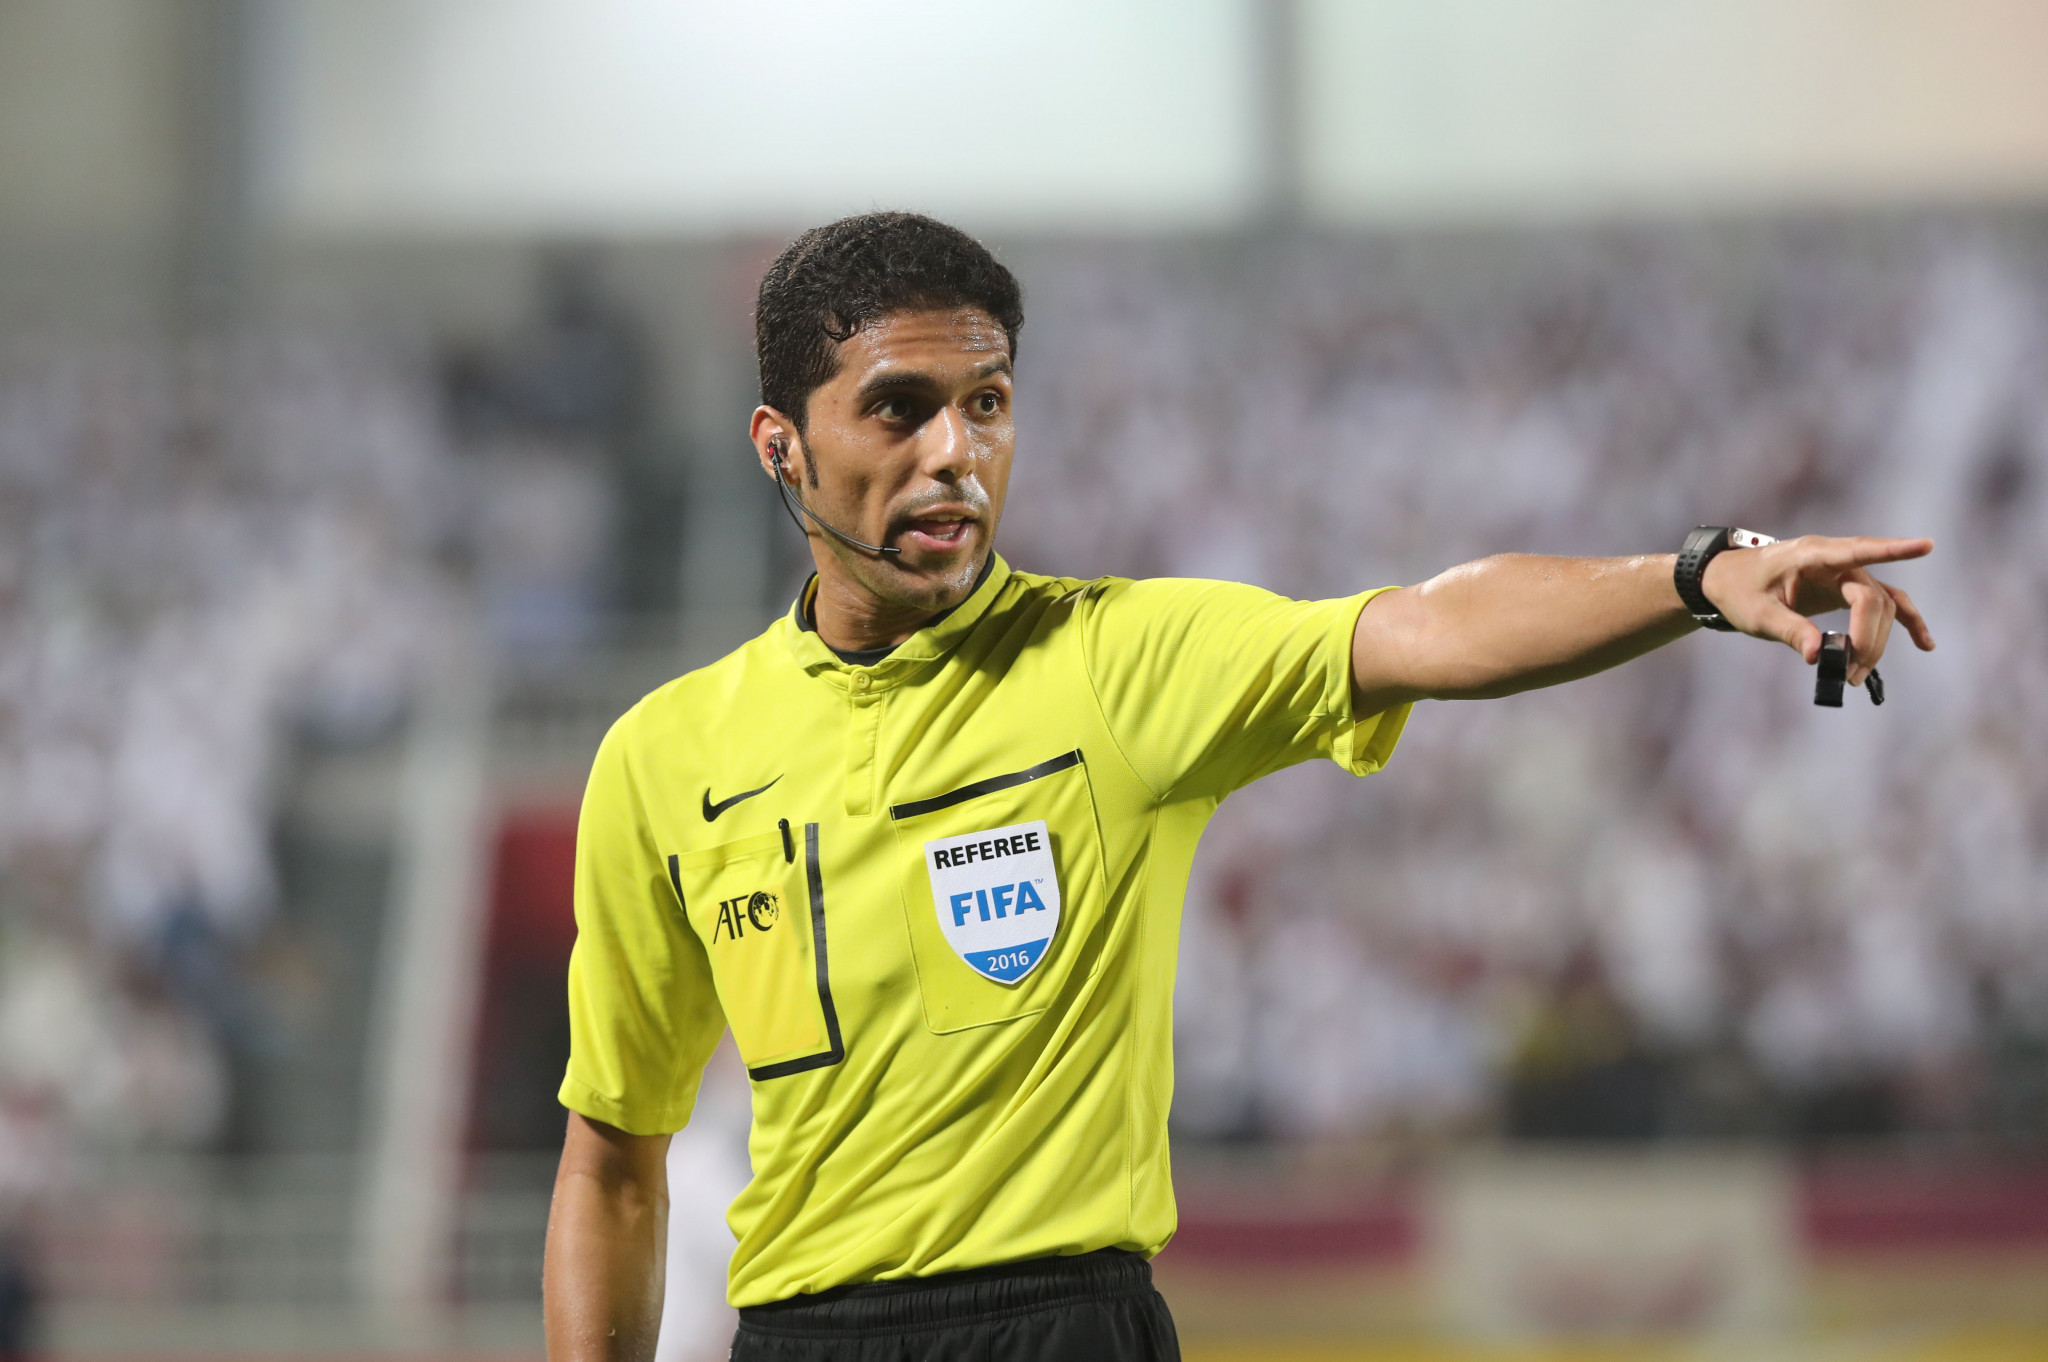 FIFA World Cup referee placed under investigation in Saudi Arabia